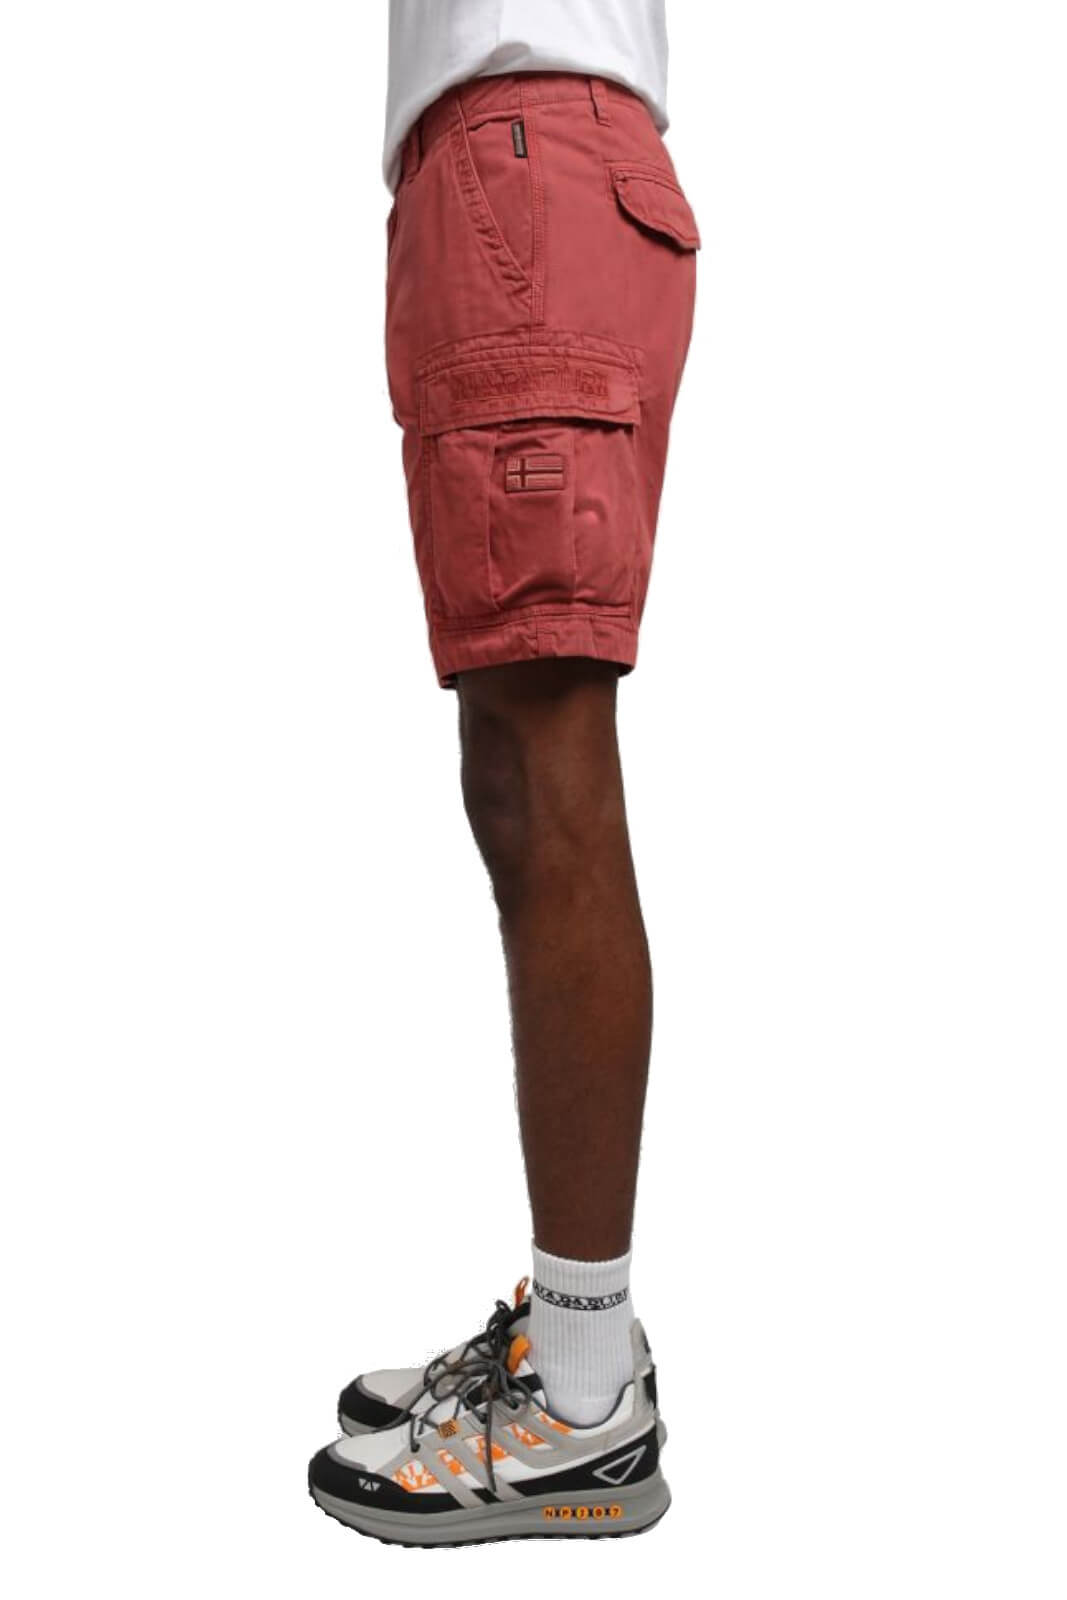 Napapijri Nus men's bermuda shorts with large pockets